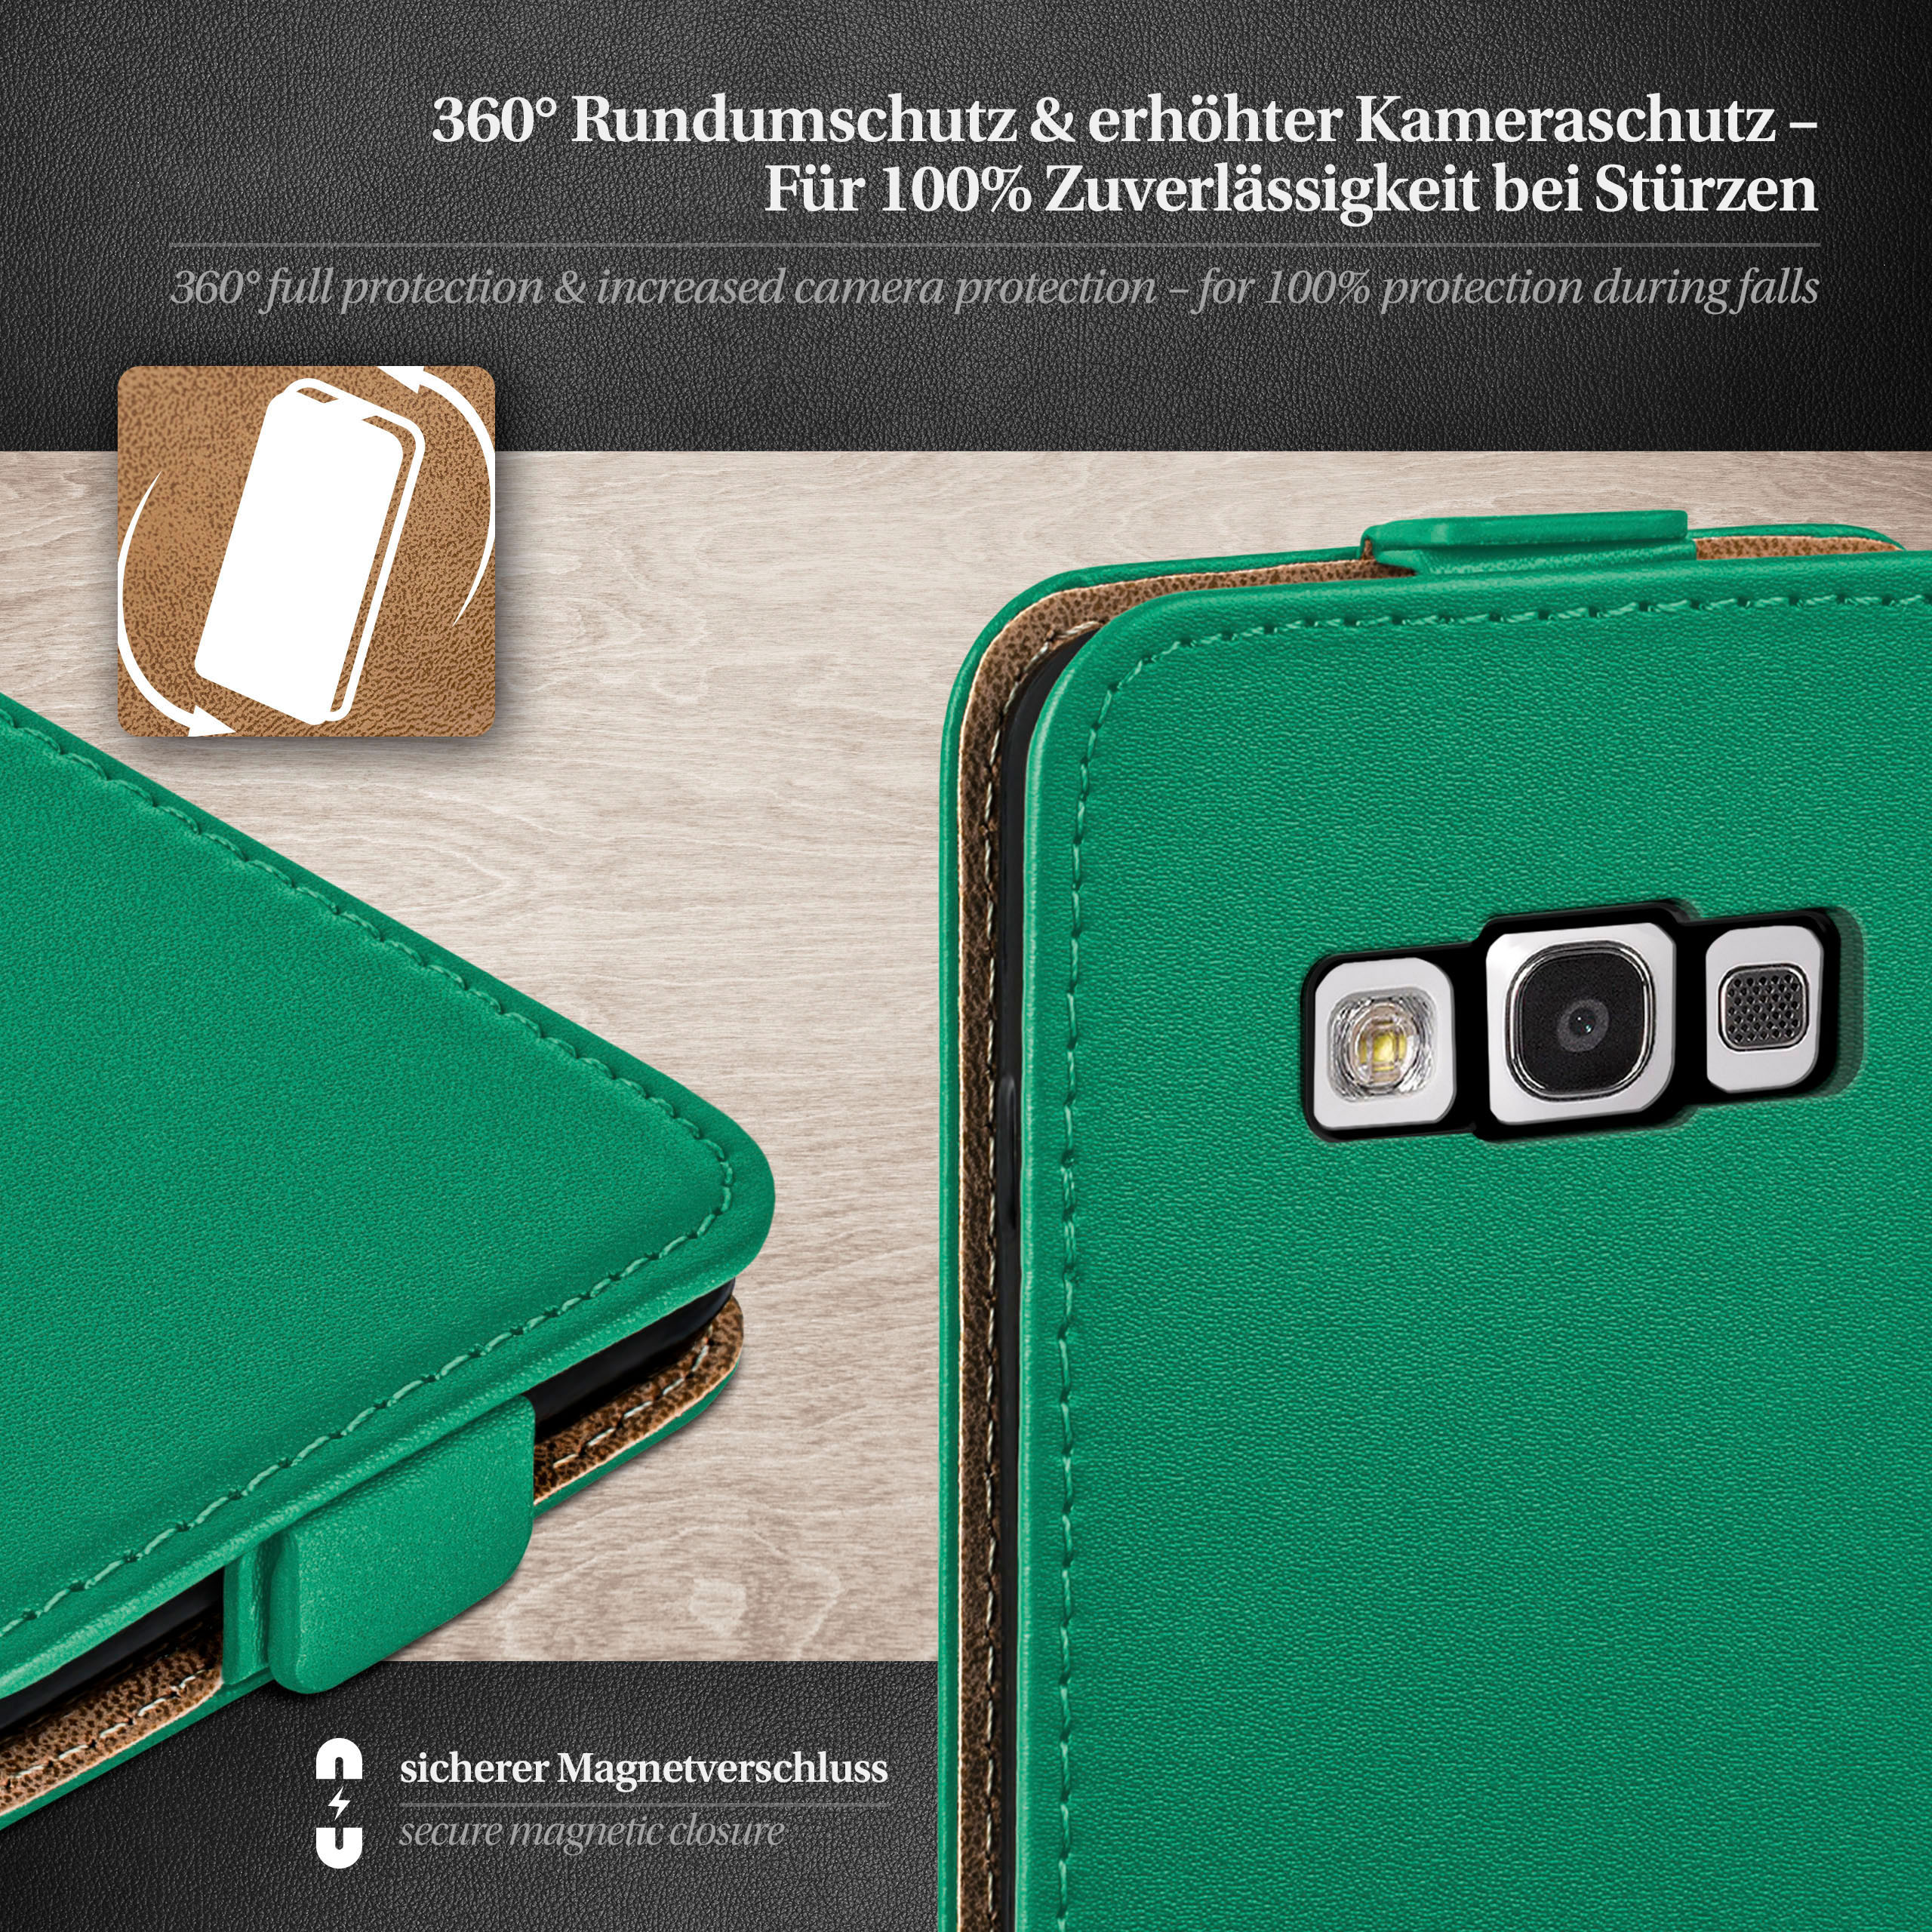 Samsung, Neo, Galaxy S3 Case, Emerald-Green MOEX / S3 Cover, Flip Flip